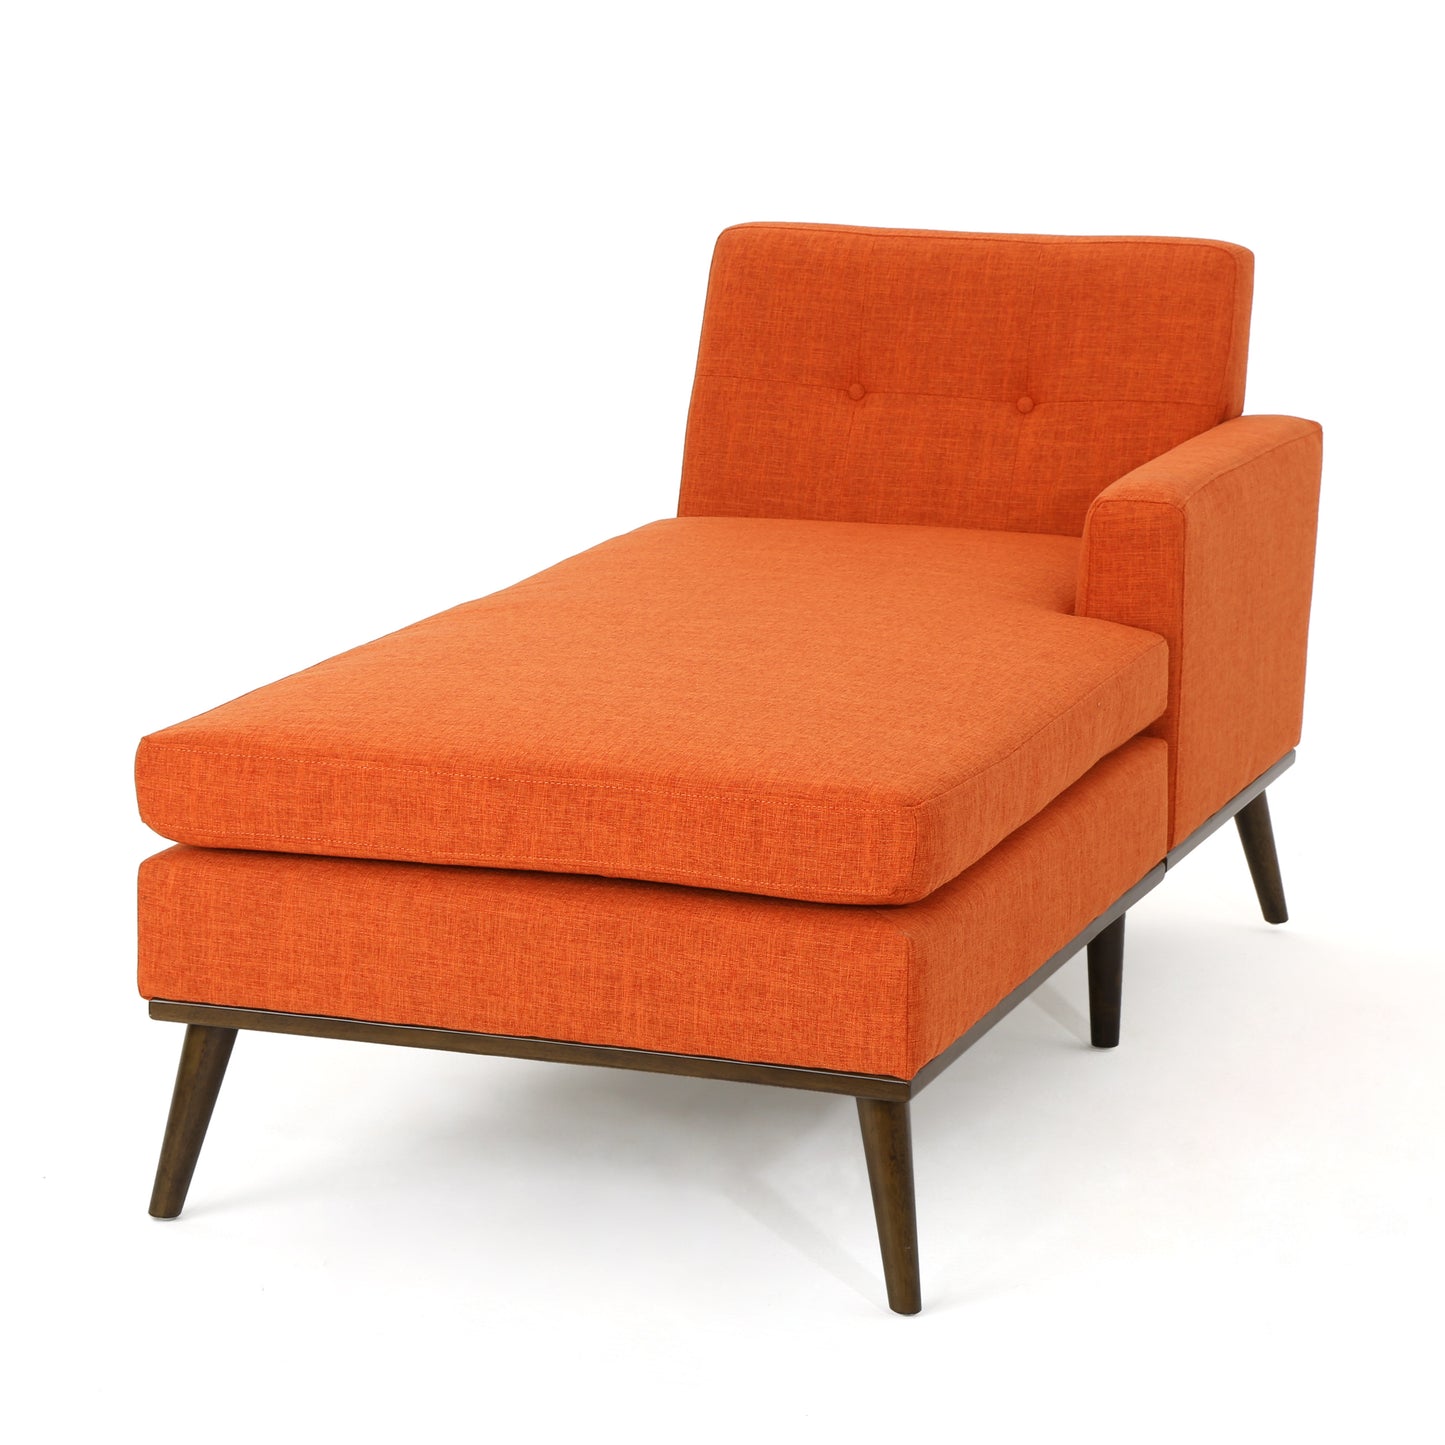 Sophia Mid-Century Modern Fabric Chaise Lounge